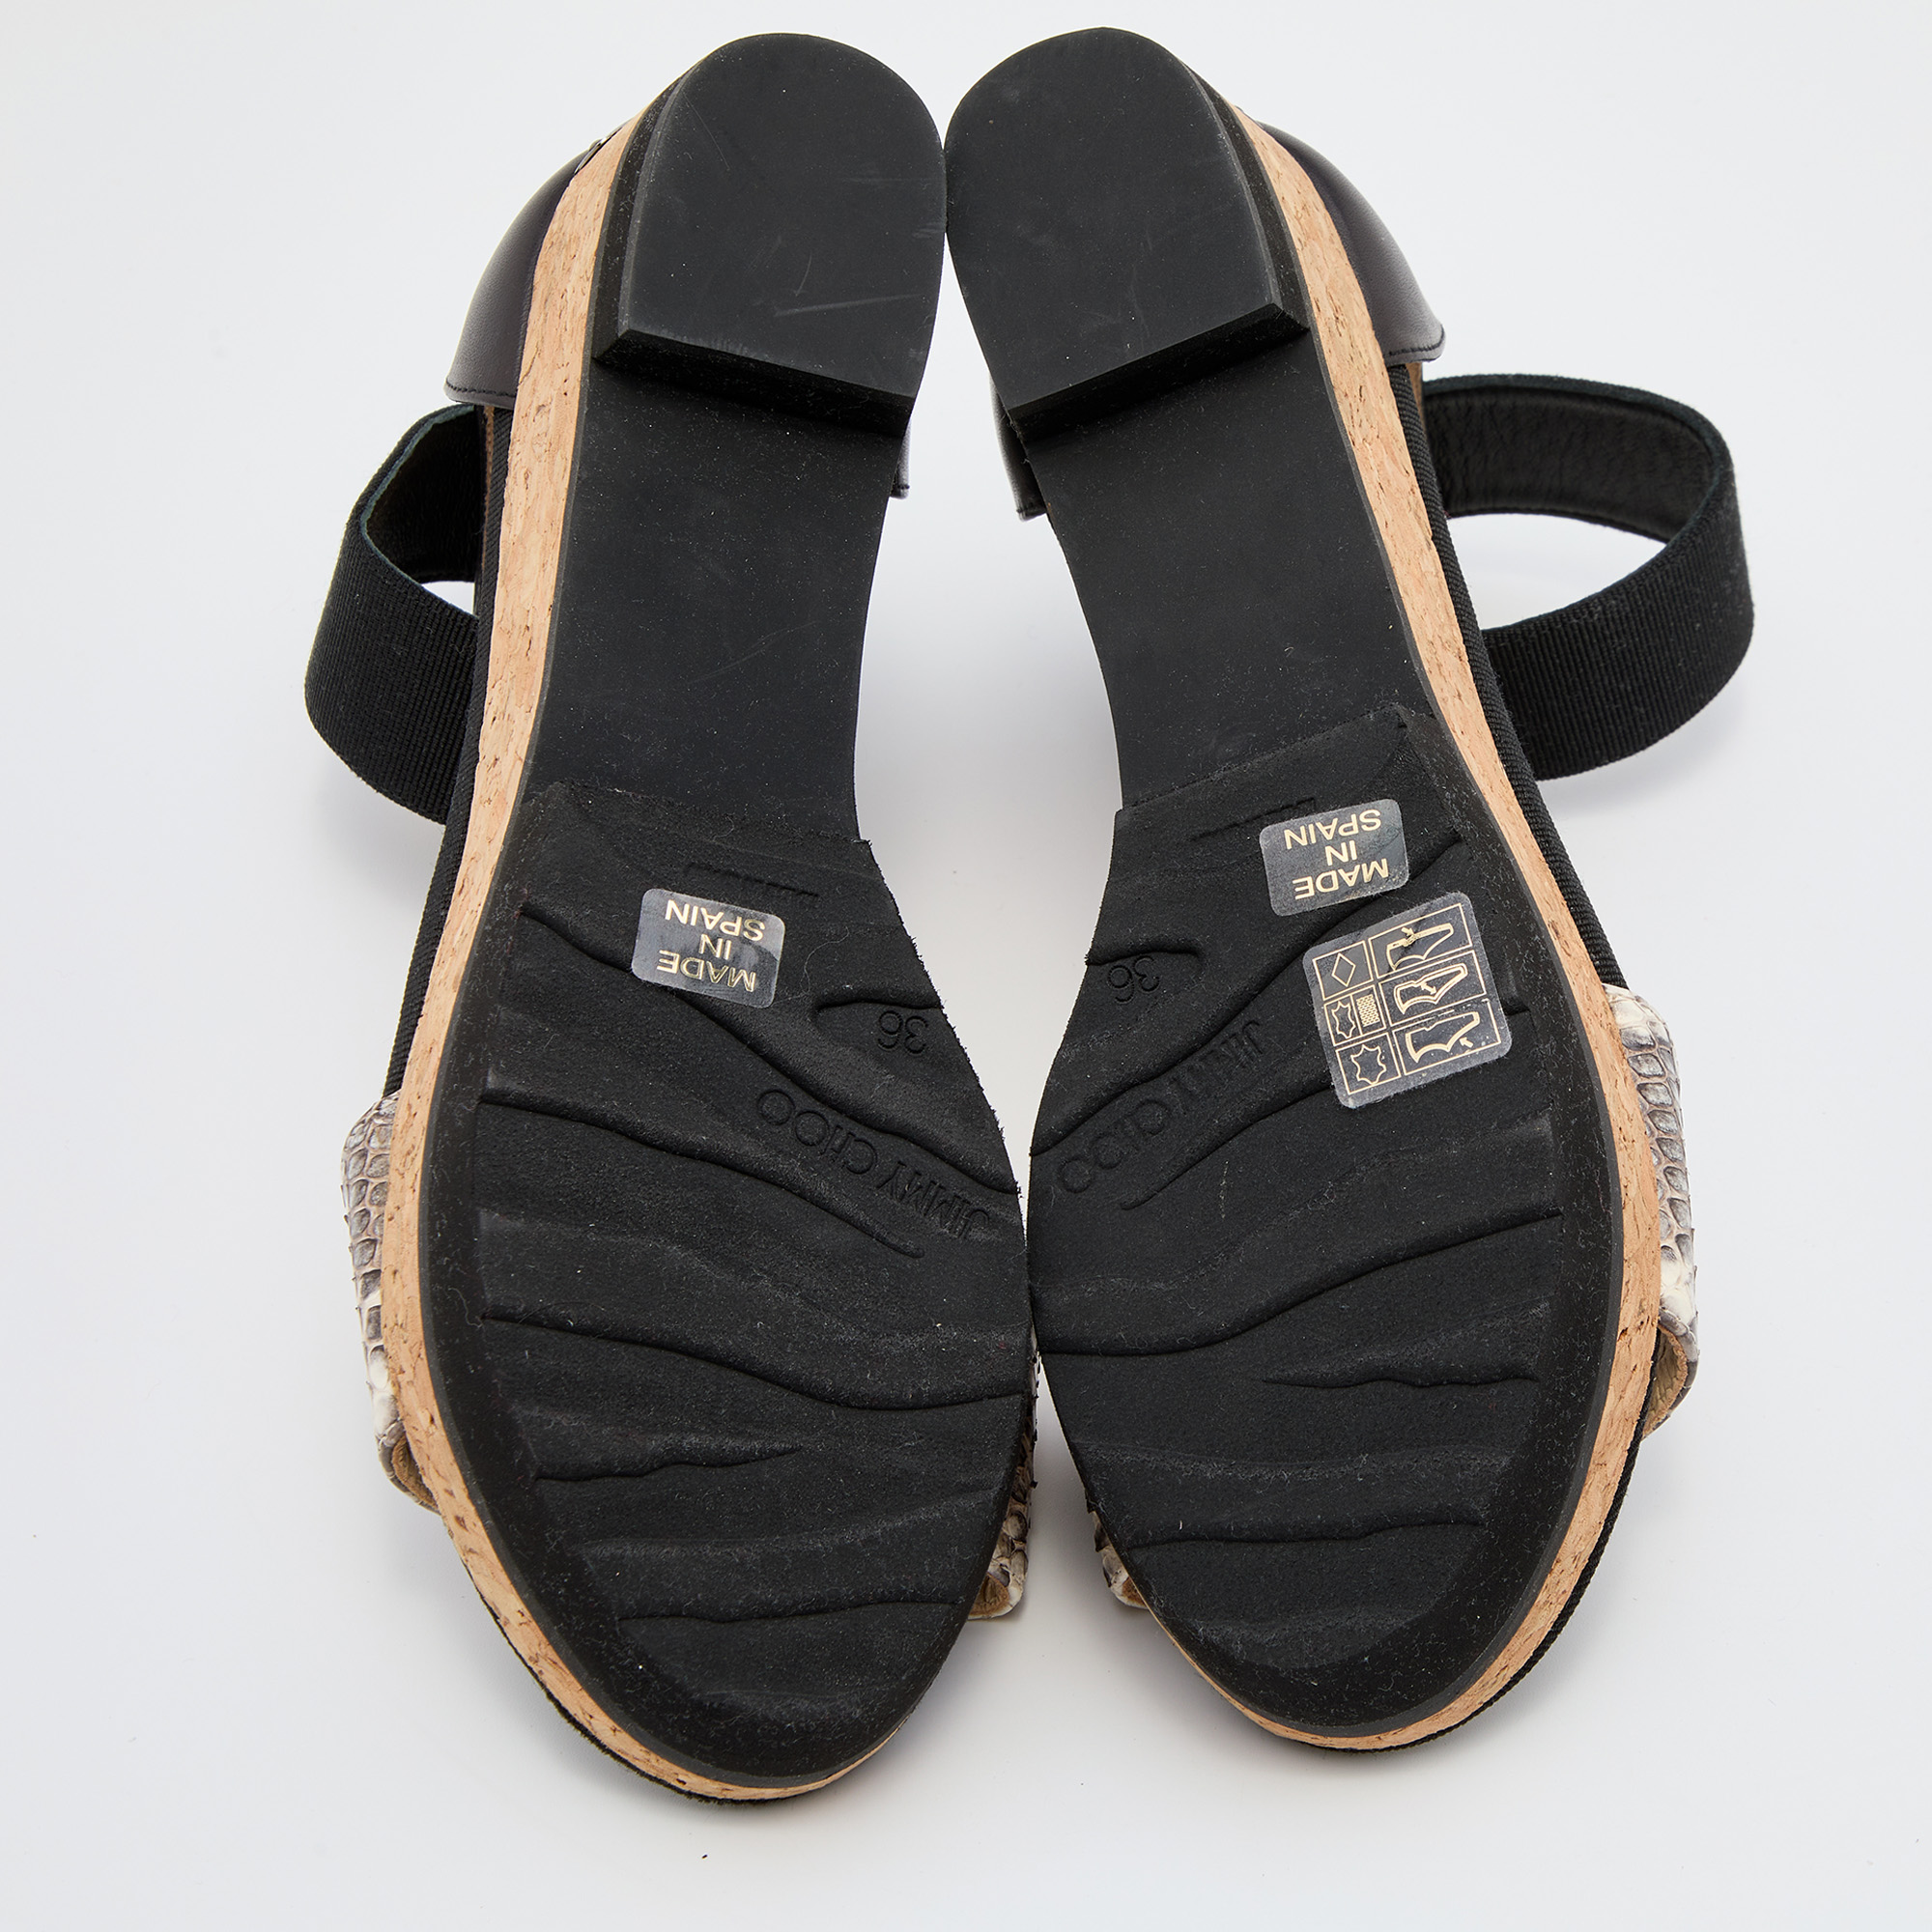 Jimmy Choo Black/Grey Snakeskin Leather Platform Ankle Strap Sandals Size 36